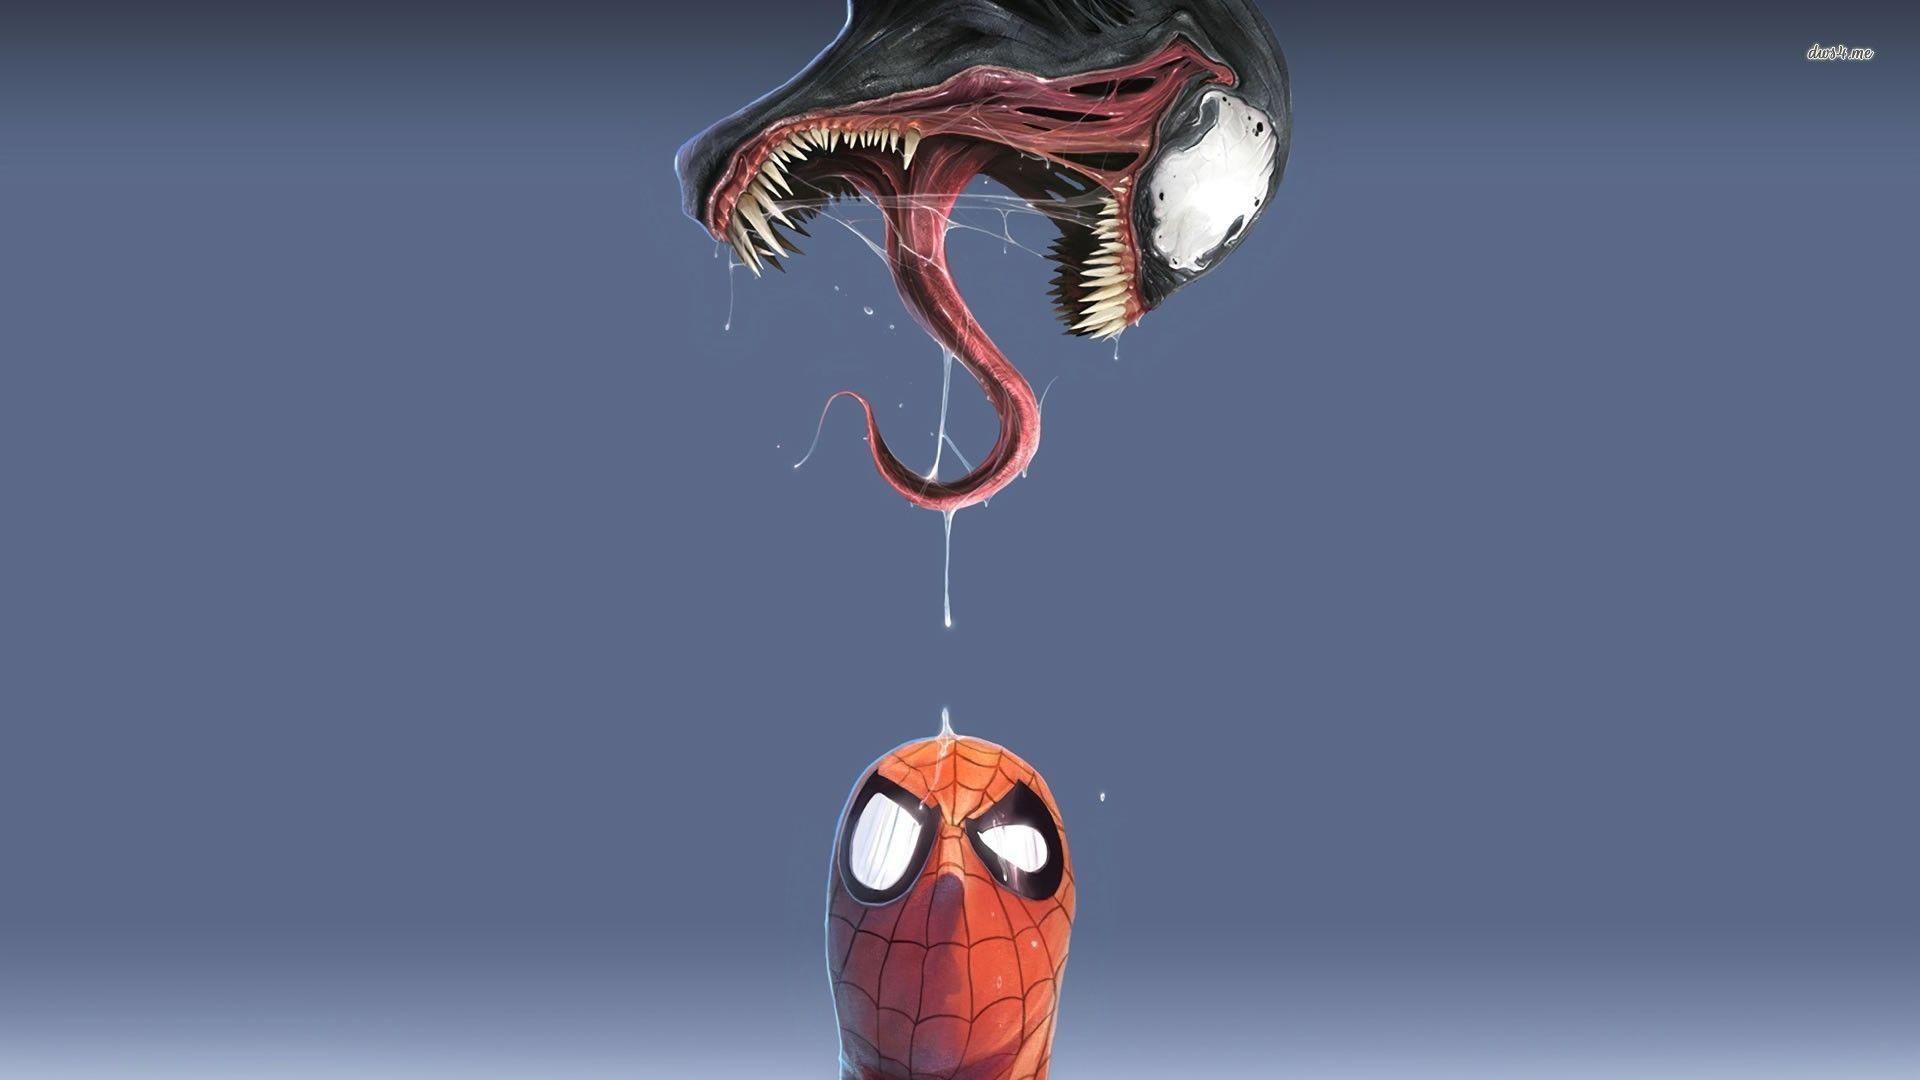 1080x1920  1080x1920 spiderman venom superheroes artist artwork  digital art hd for Iphone 6 7 8 wallpaper  Coolwallpapersme